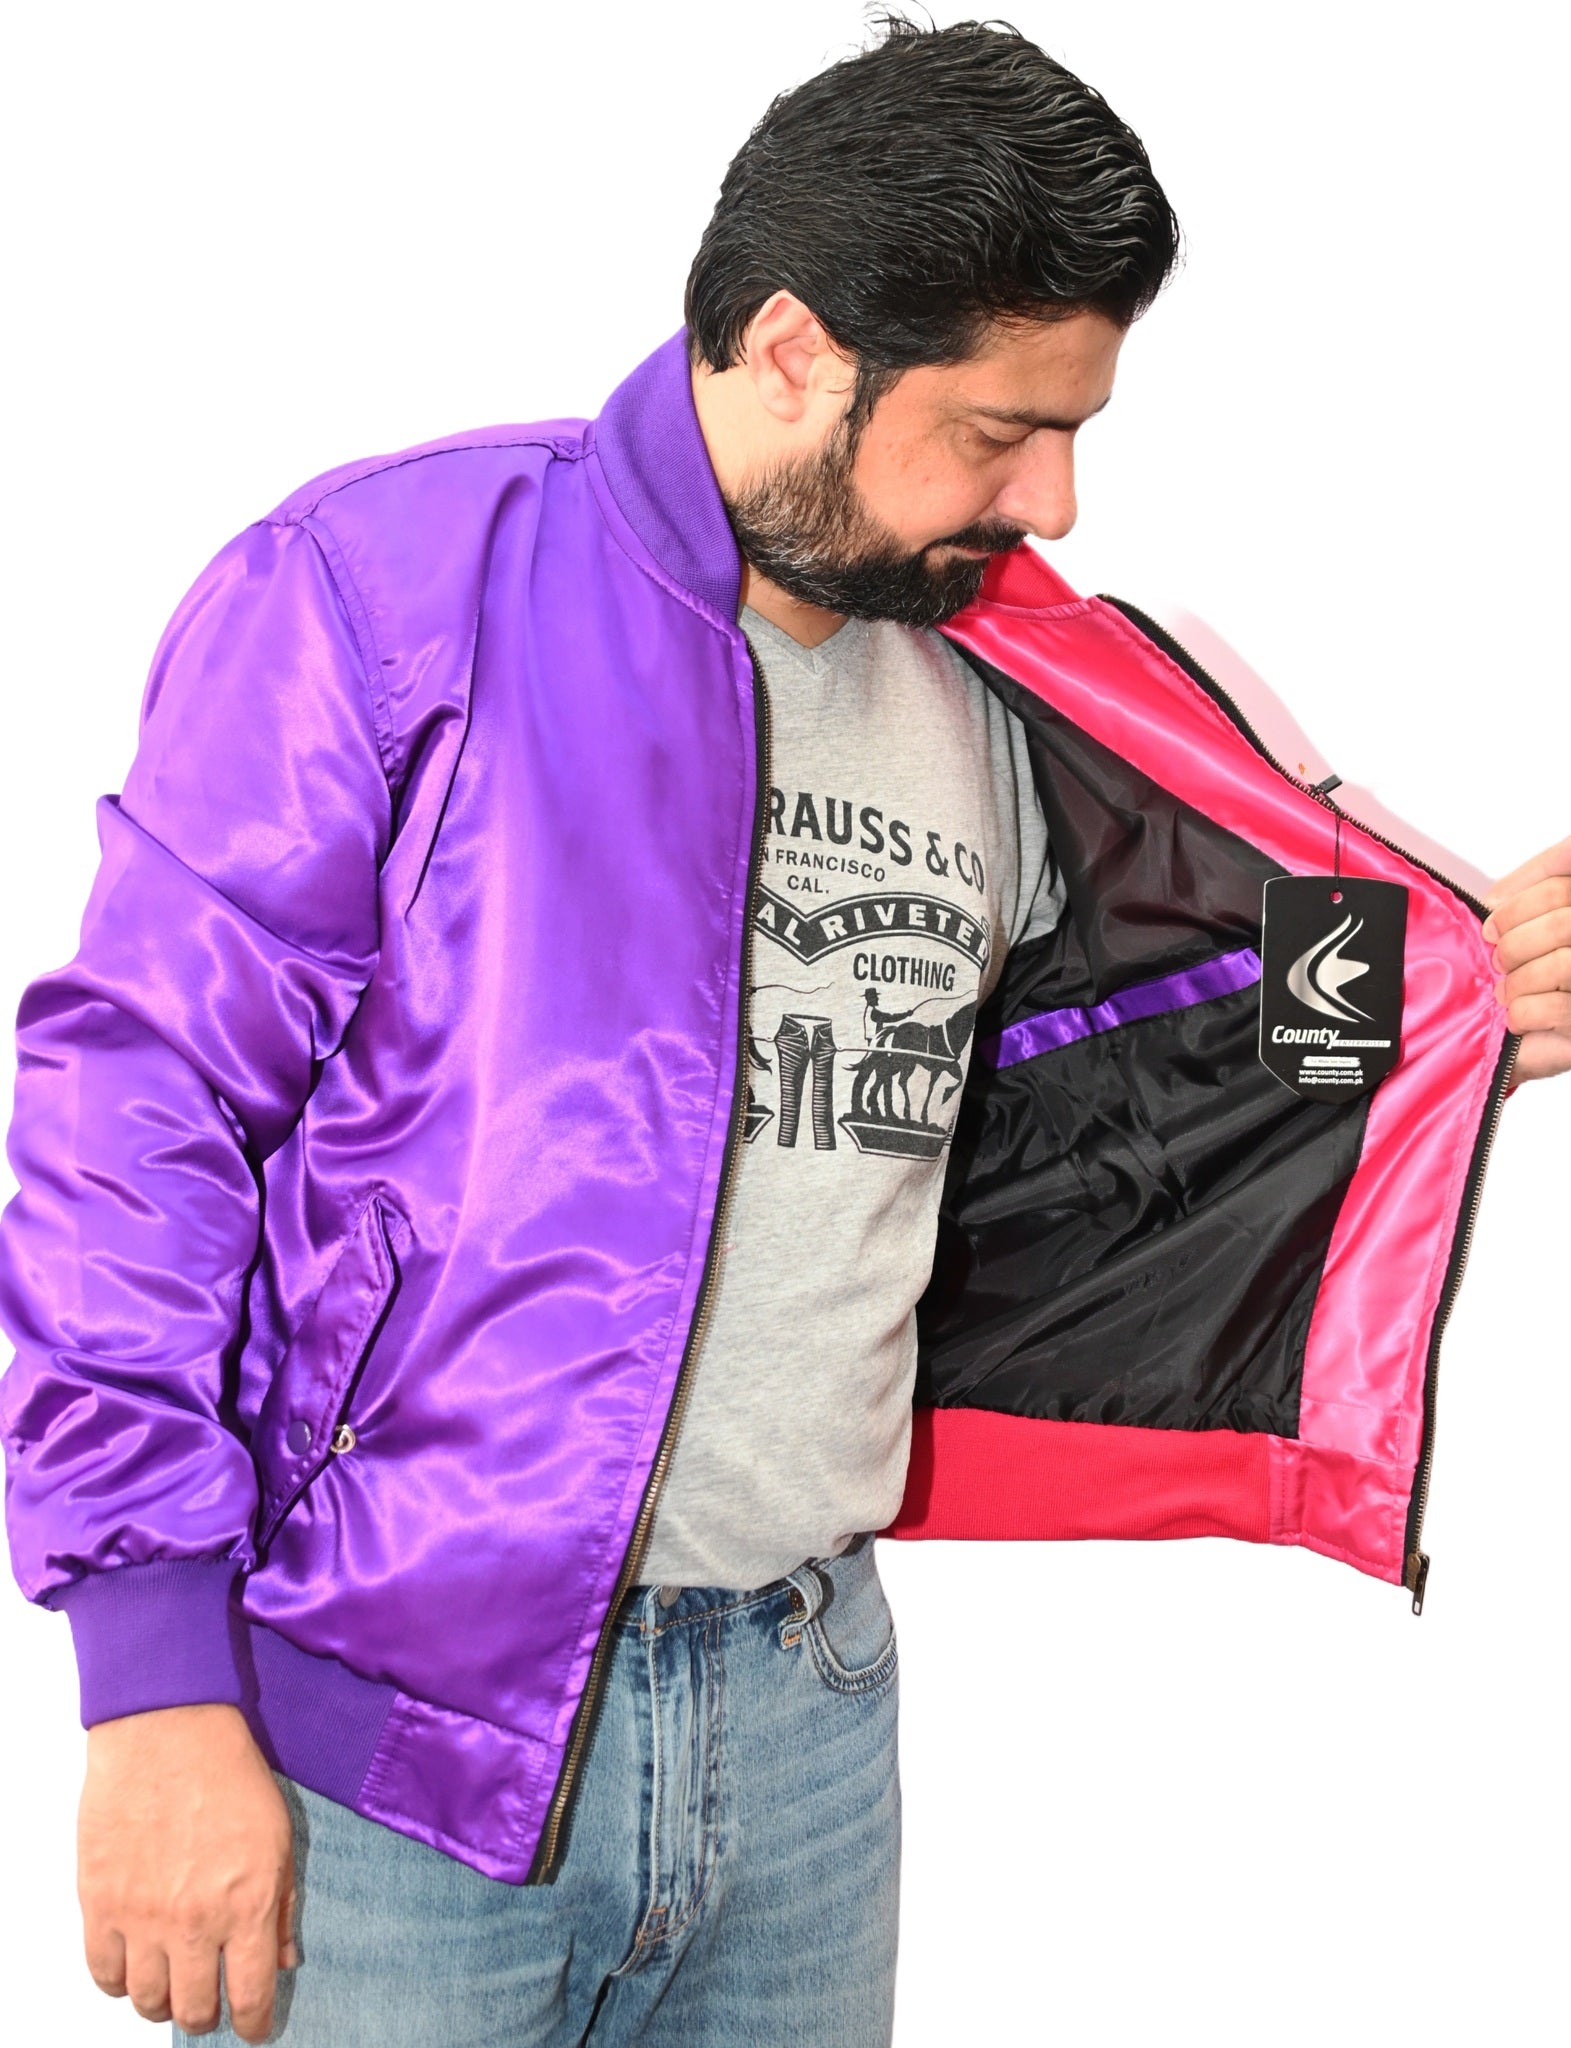 Letterman Varsity Bomber Jacket Sports Wear Hot Pink and Purple Satin